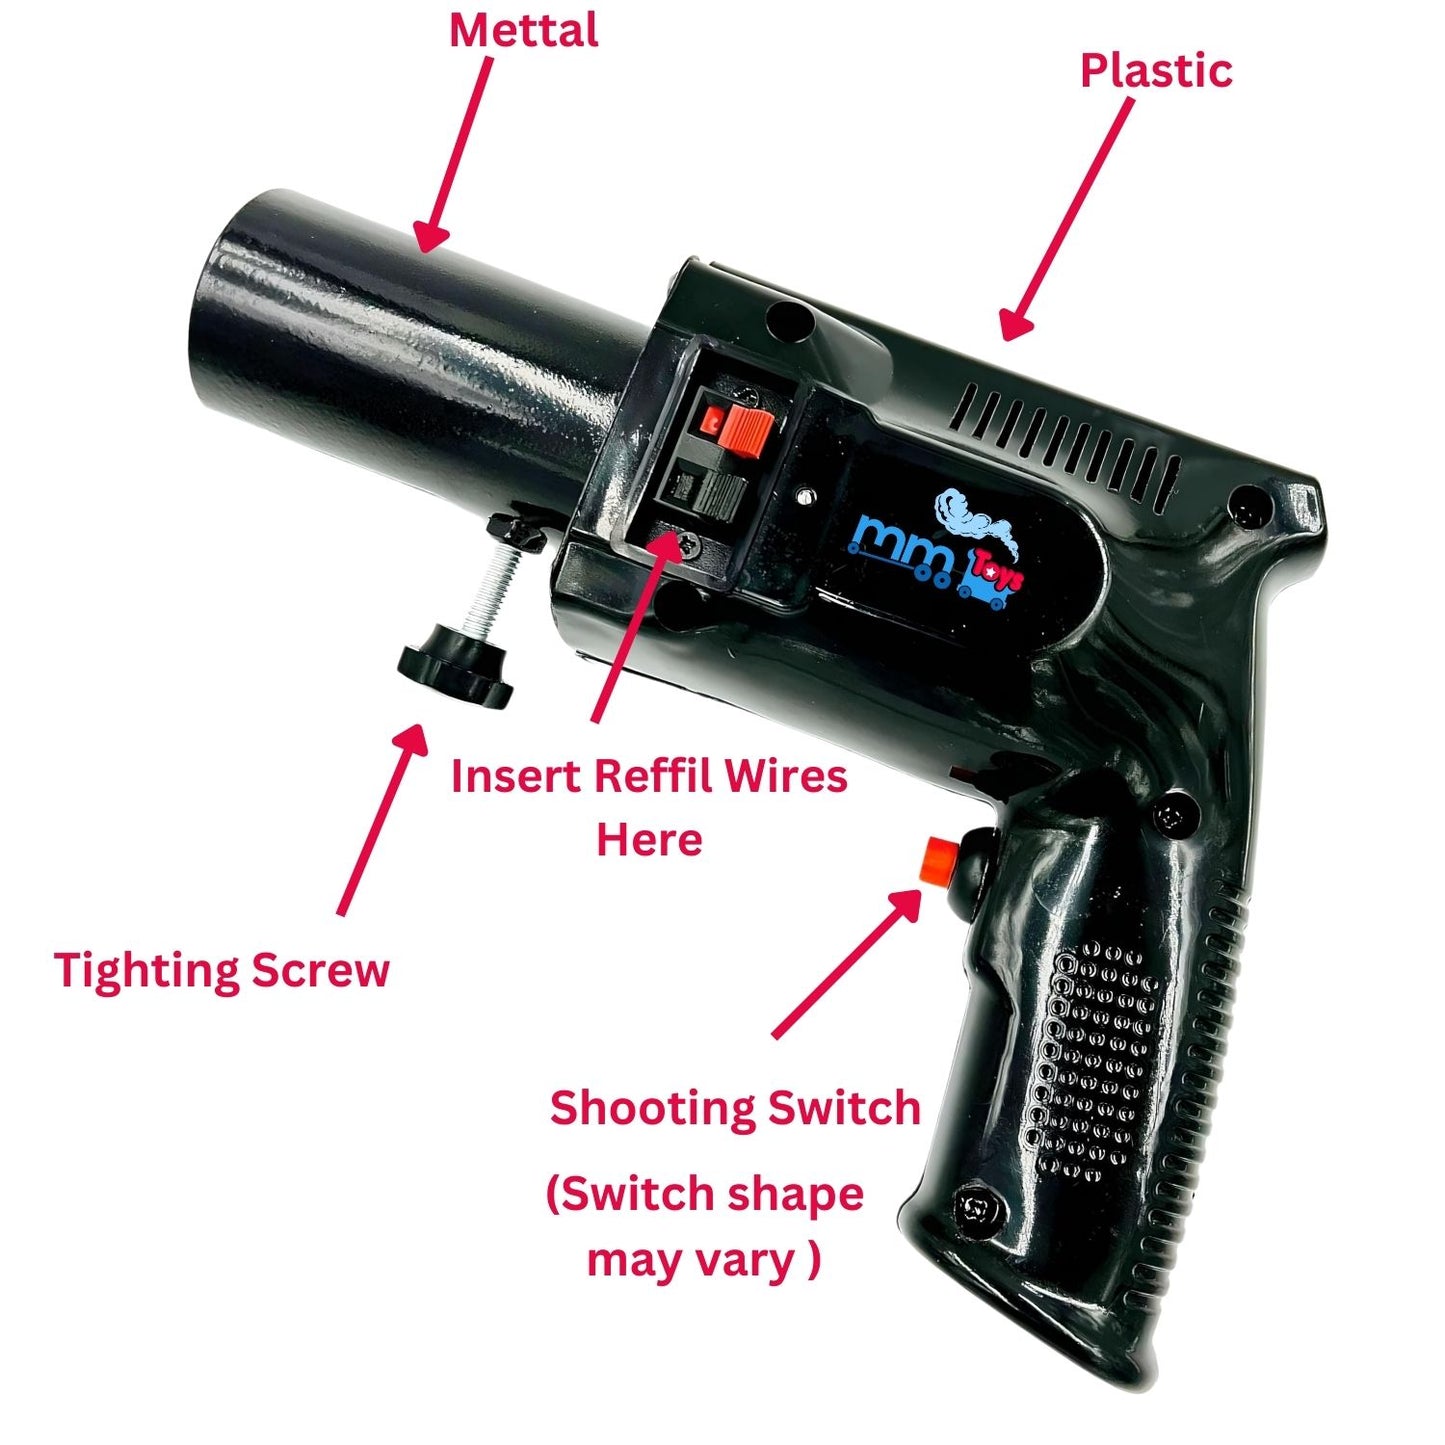 MM TOYS Handheld Sparkle Smoke Gun - Black + 10x Power AA Alkeline Batteries + 6 Pyro Sparkel Refills